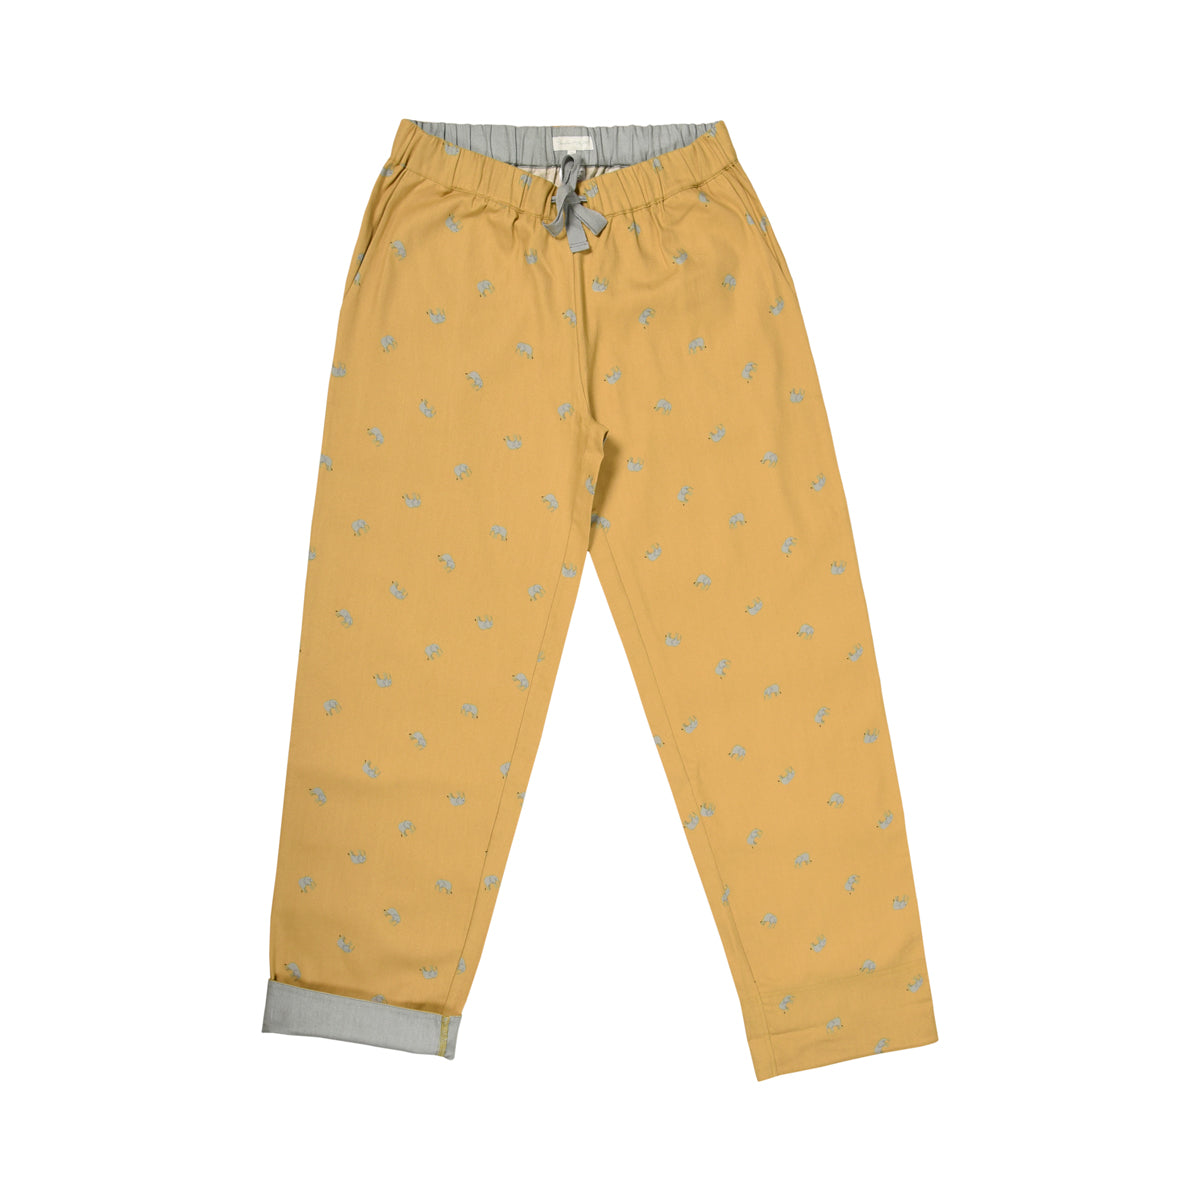 Mustard yellow pyjama bottoms covered in pretty grey elephants